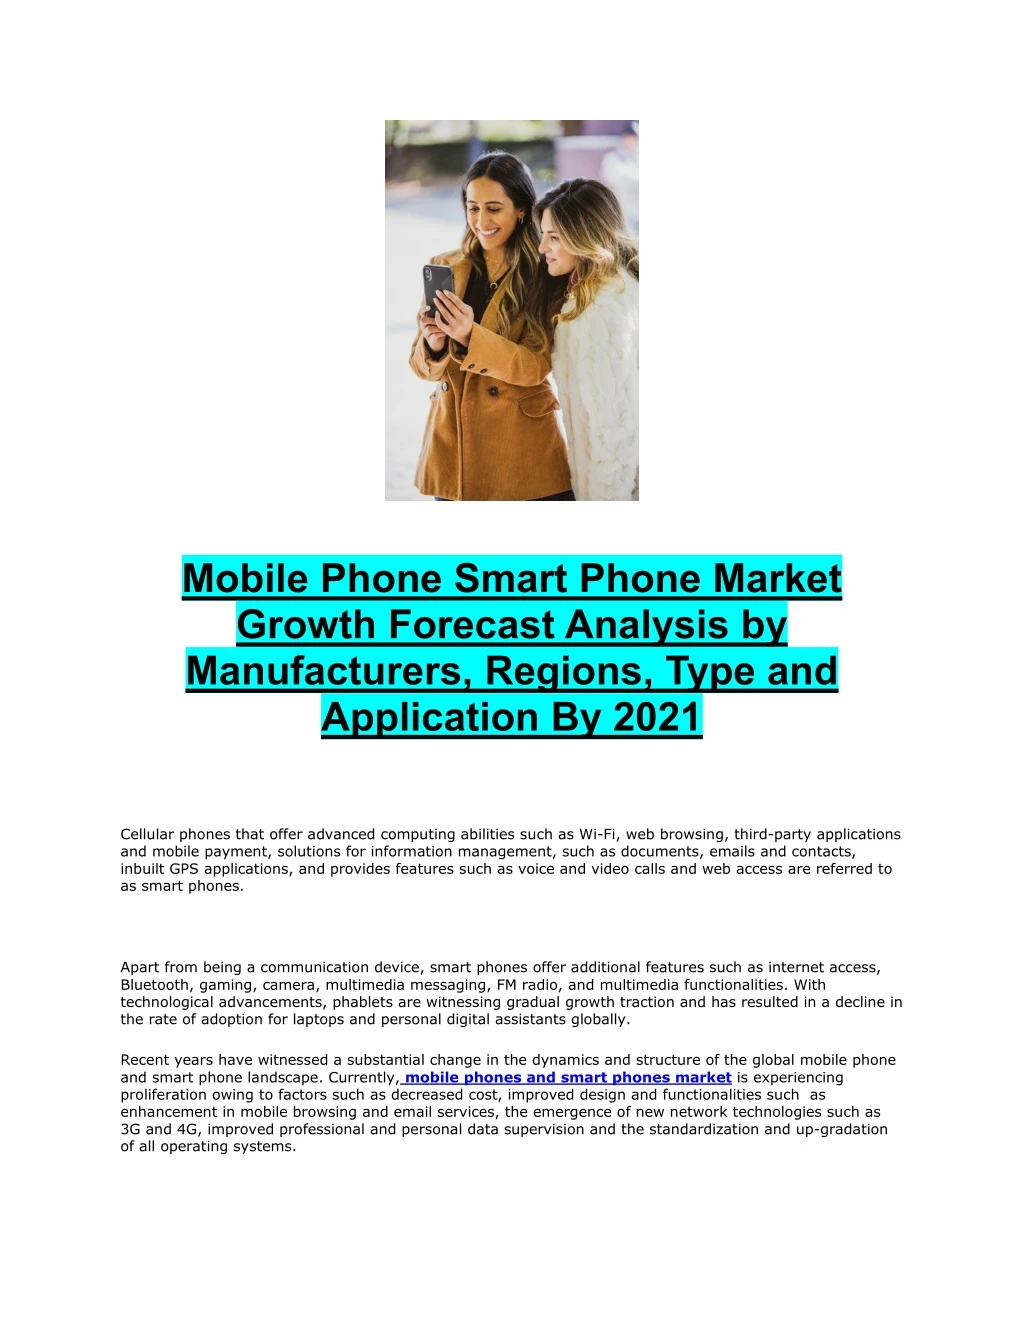 mobile phone smart phone market growth forecast